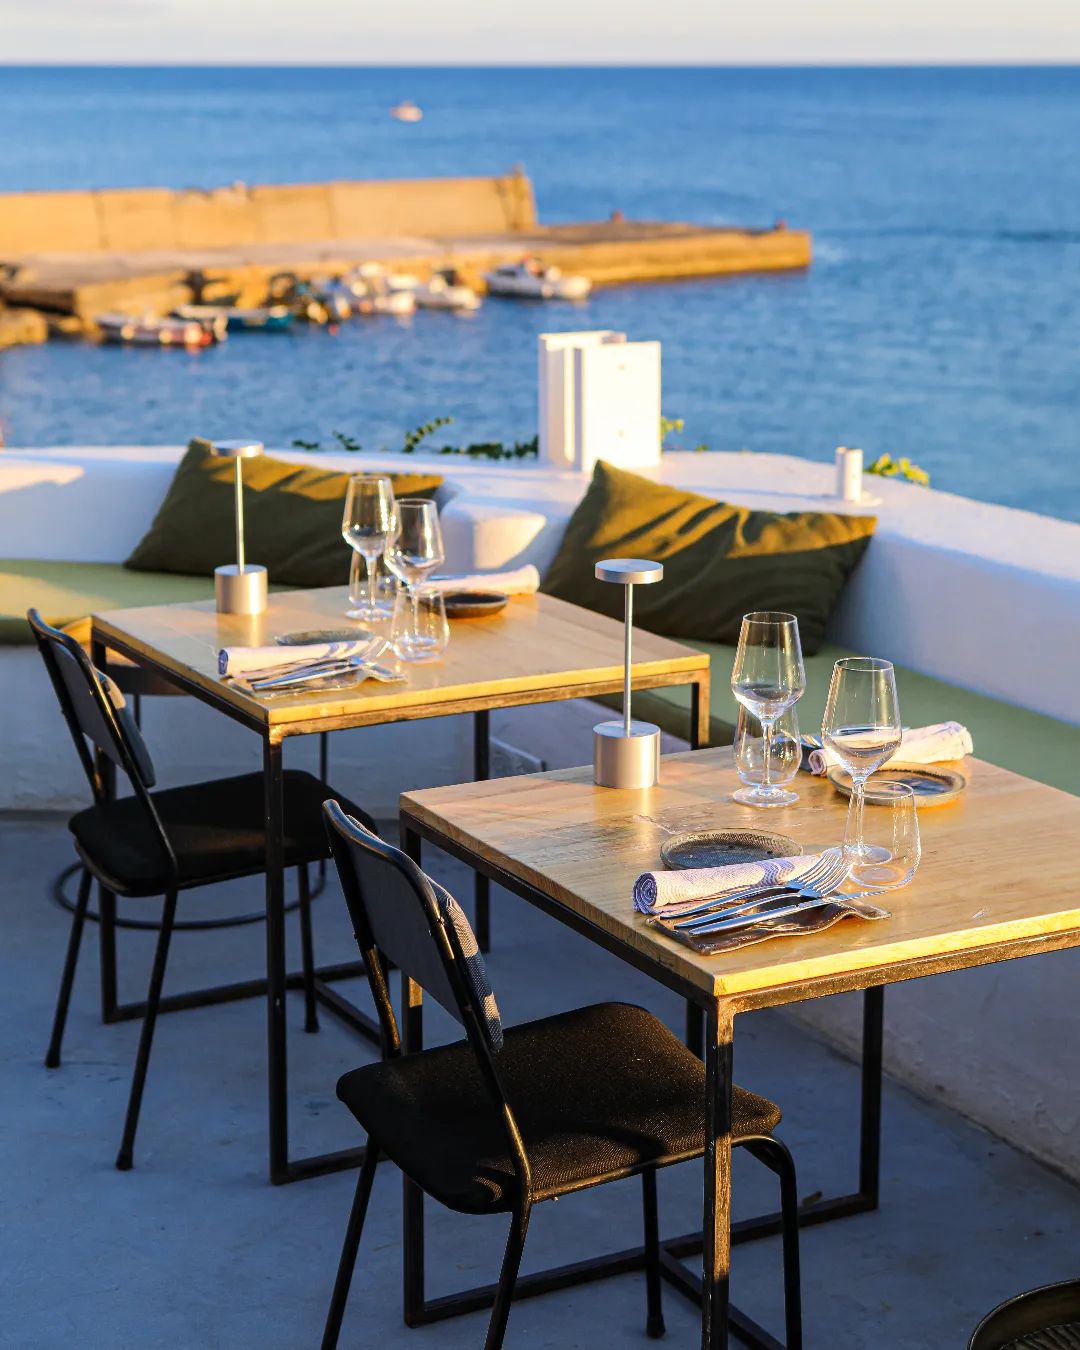 Ristoranti dove mangiare a Pantelleria, Ristorante Pantelleria, Ristorante Altamarea, Esterni, Arredi.